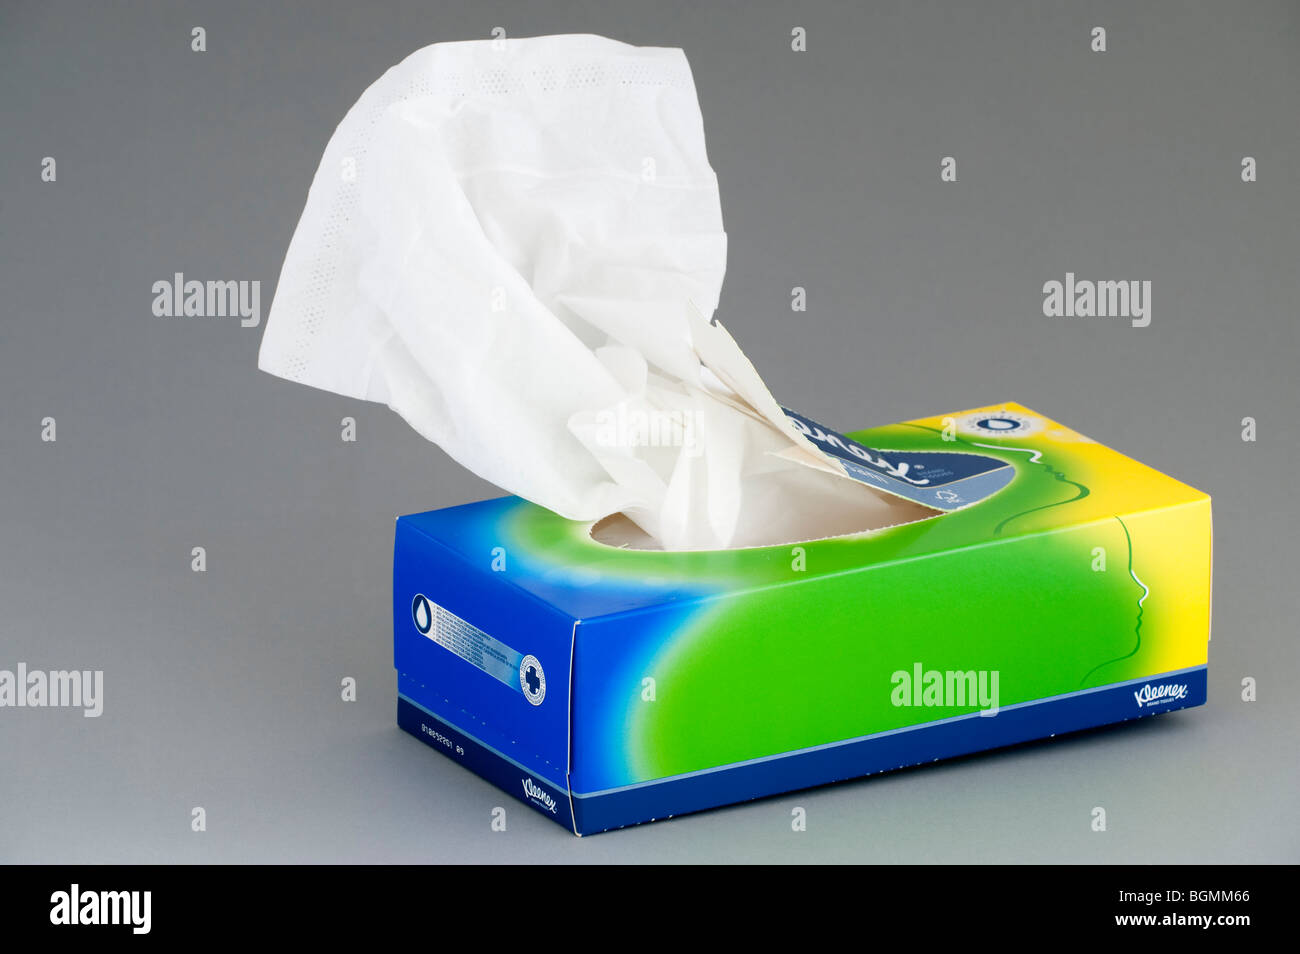 Box of Kleenex tissues Stock Photo - Alamy